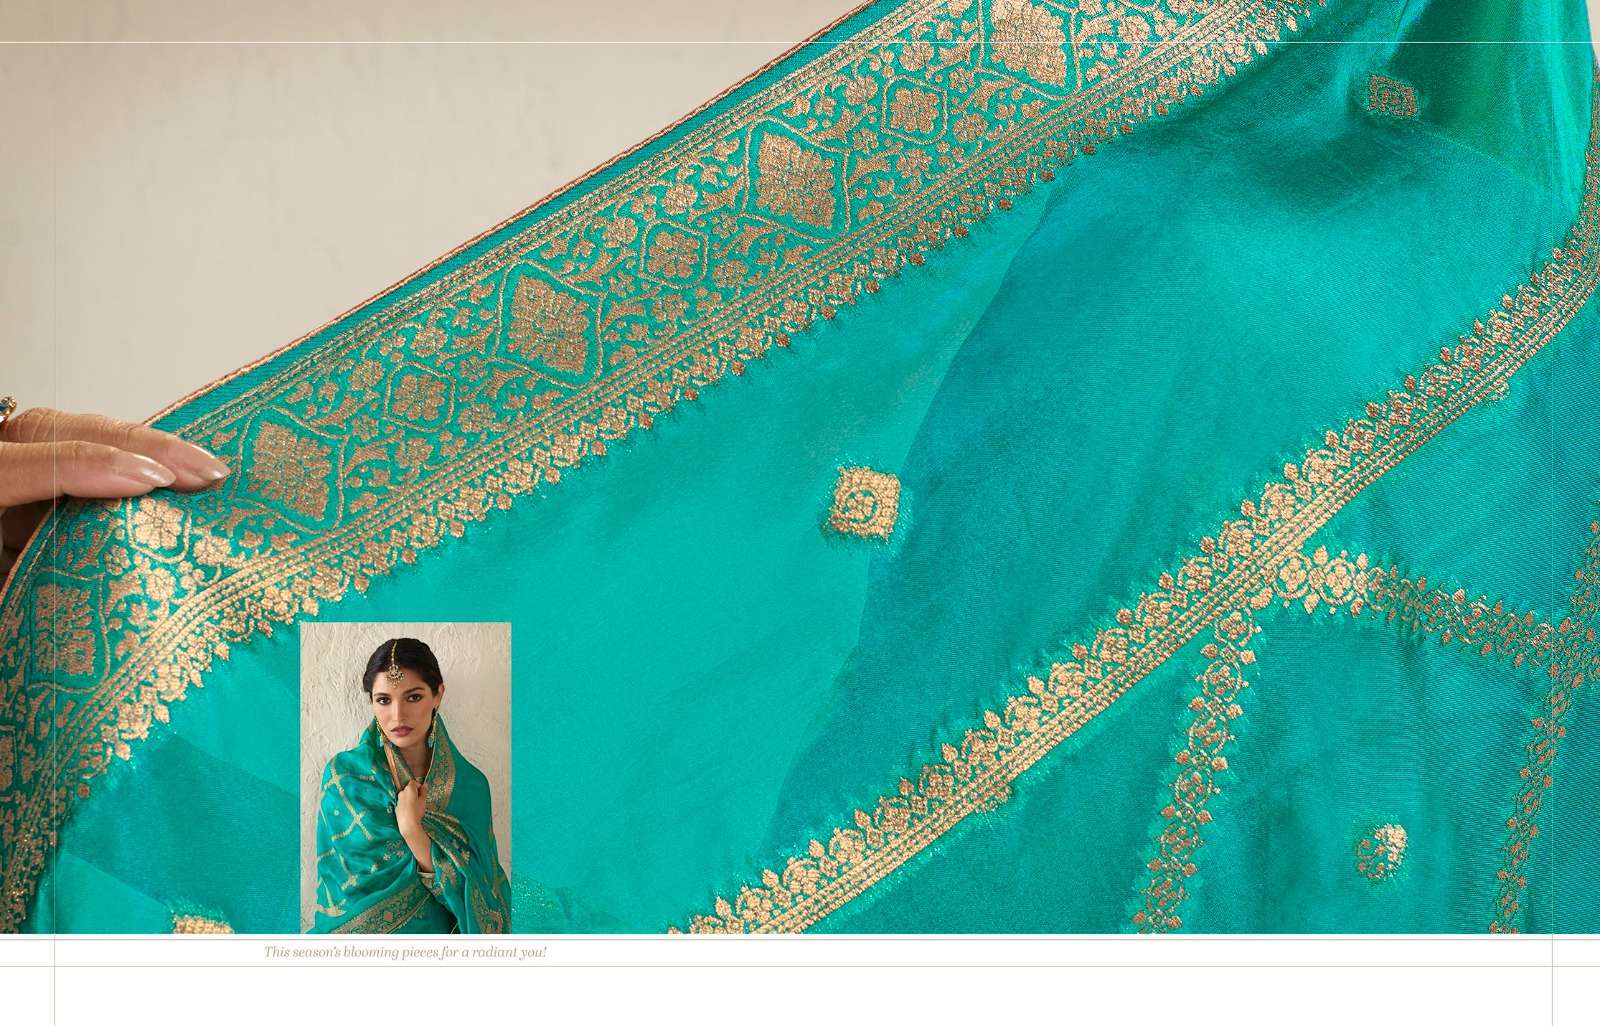 zisa charmy olive 4881-4884 series designer latest partywear salwar kameez wholesaler